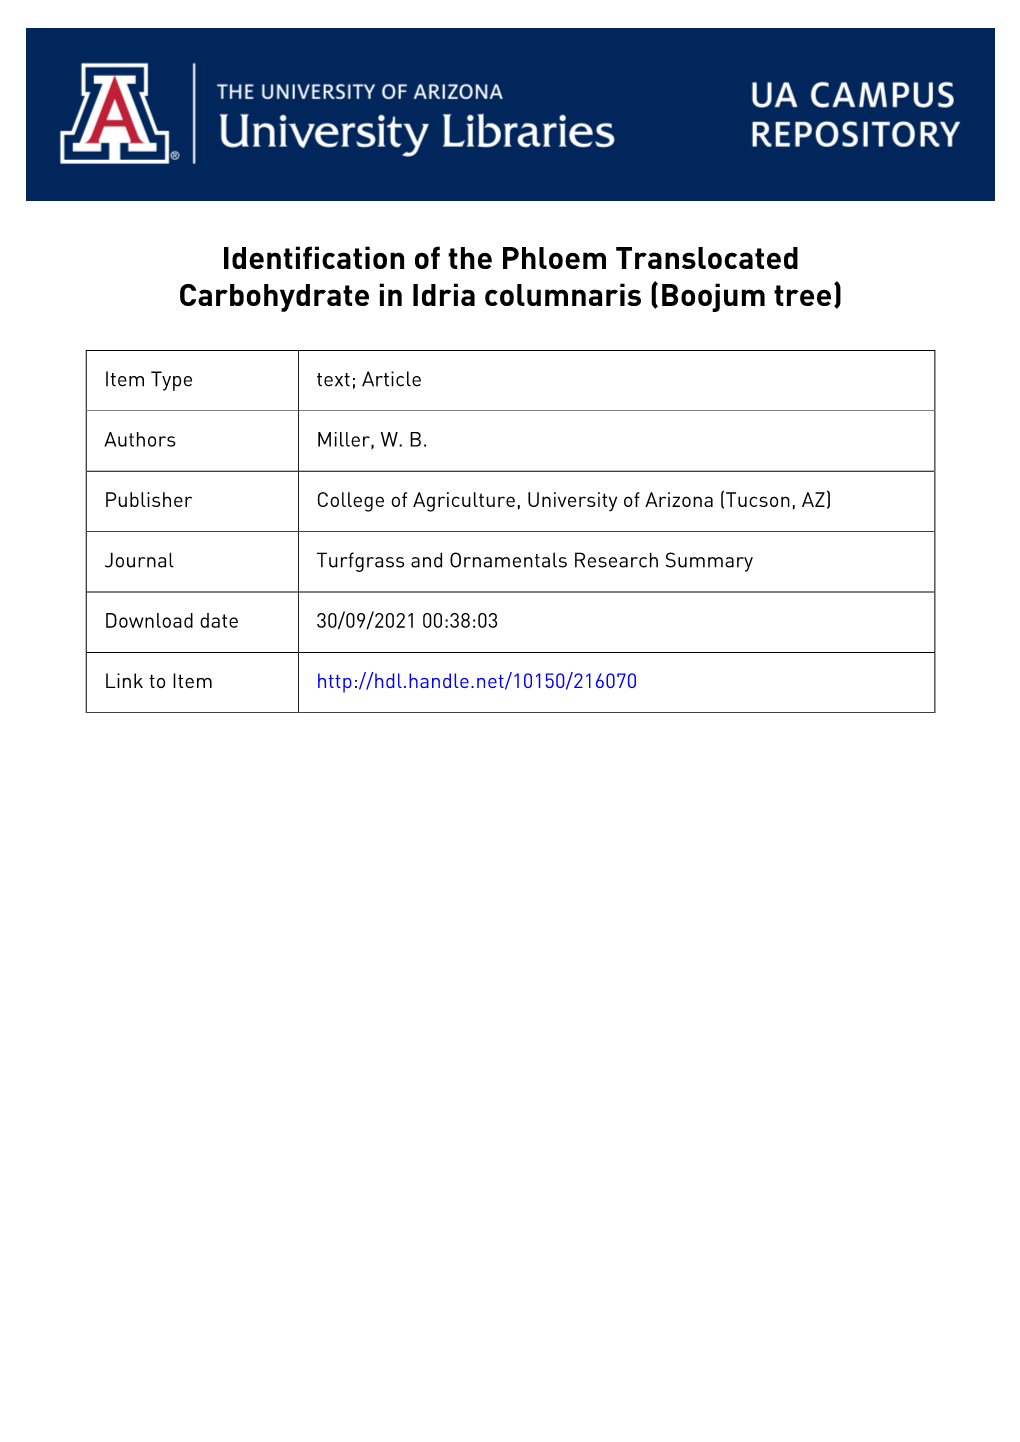 Identification of the Phloem Translocated Carbohydrate in Idria Columnaris (Boojum Tree)